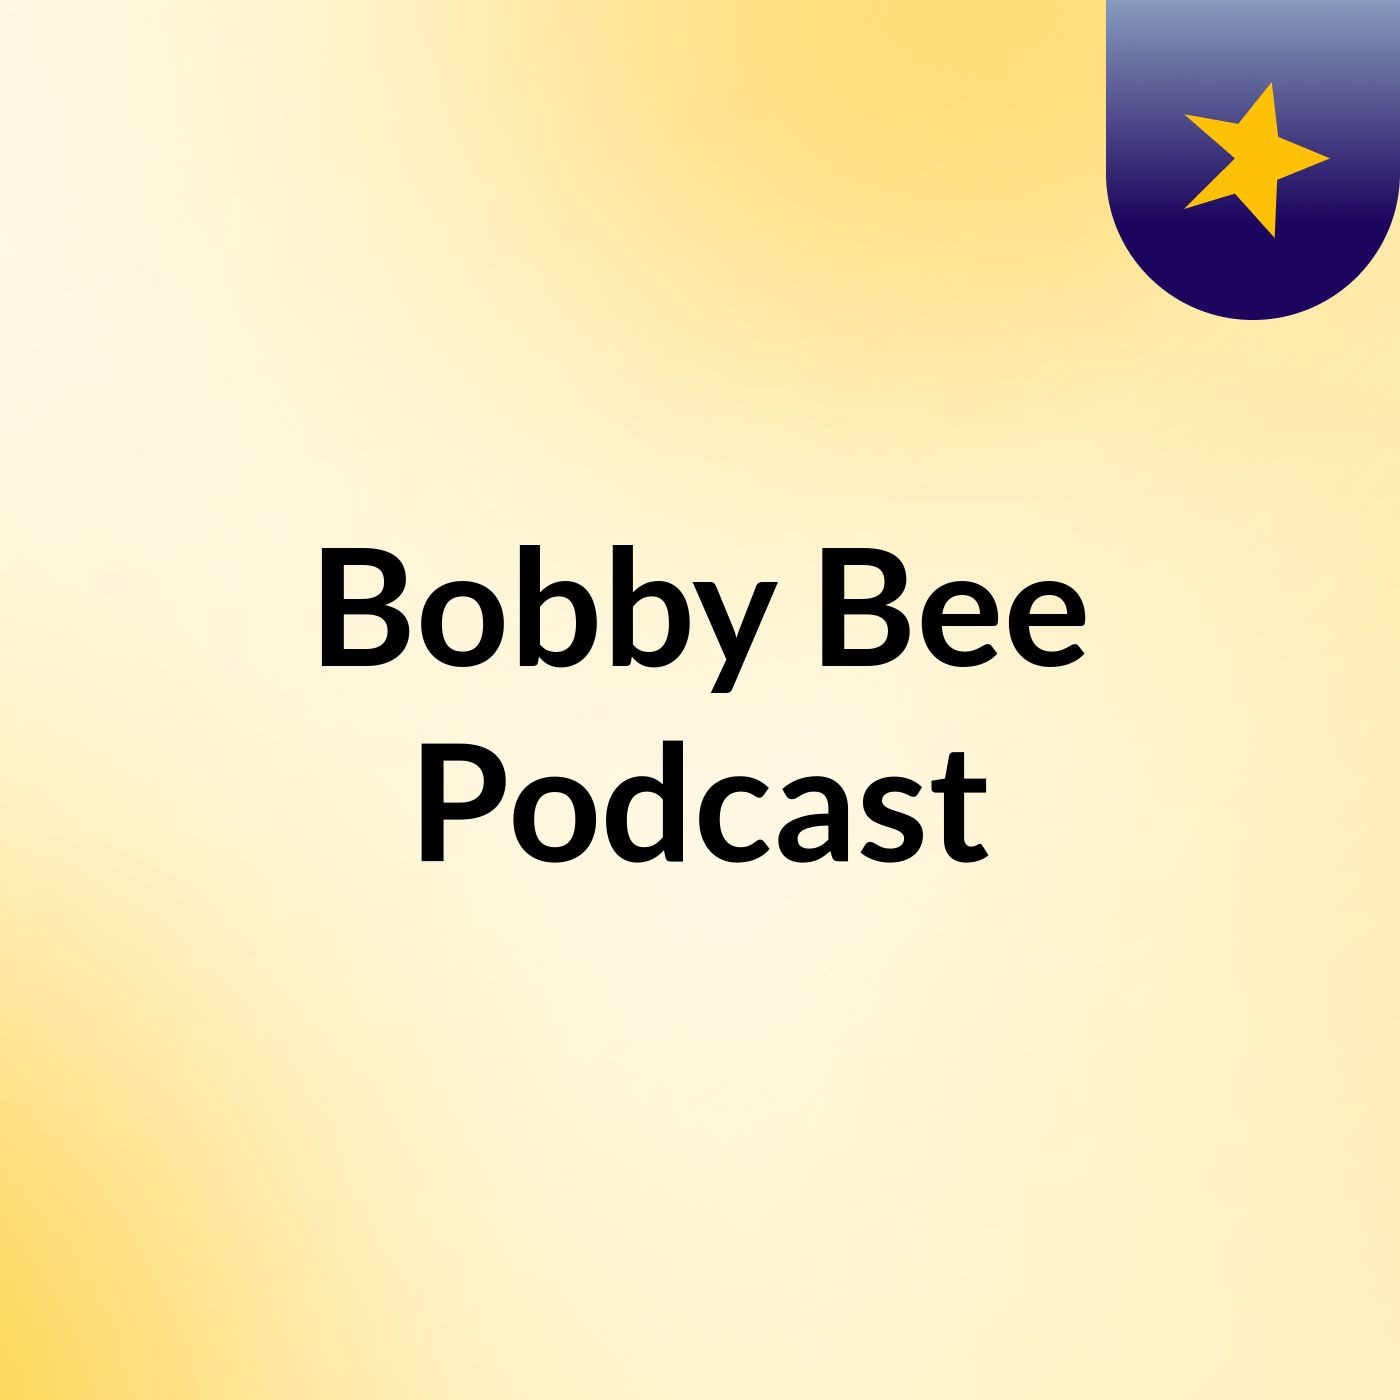 Bobby Bee Podcast